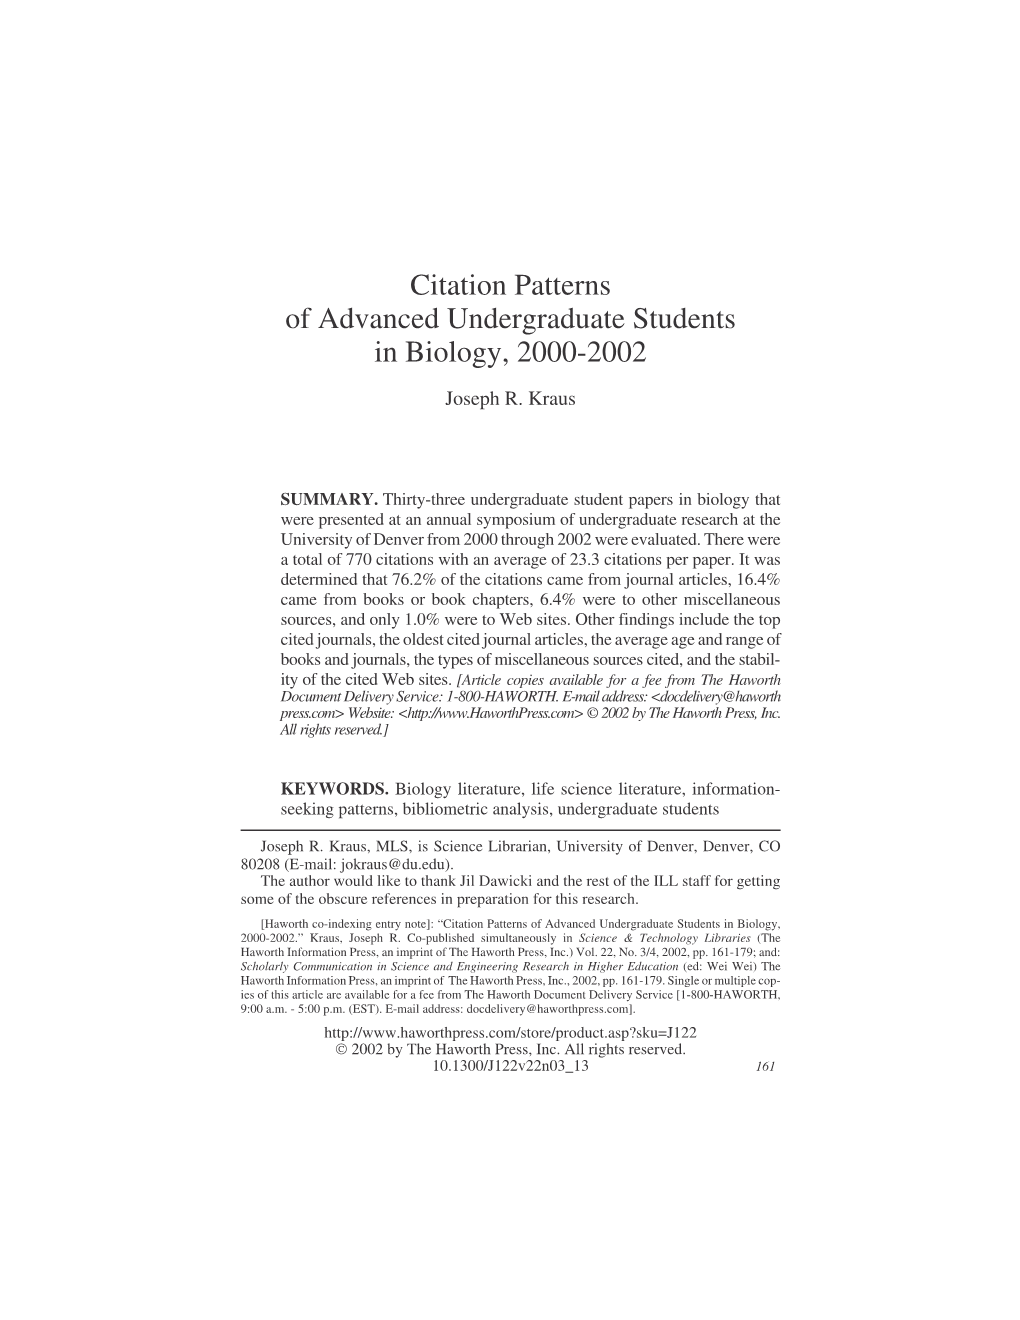 Citation Patterns of Advanced Undergraduate Students in Biology, 2000-2002